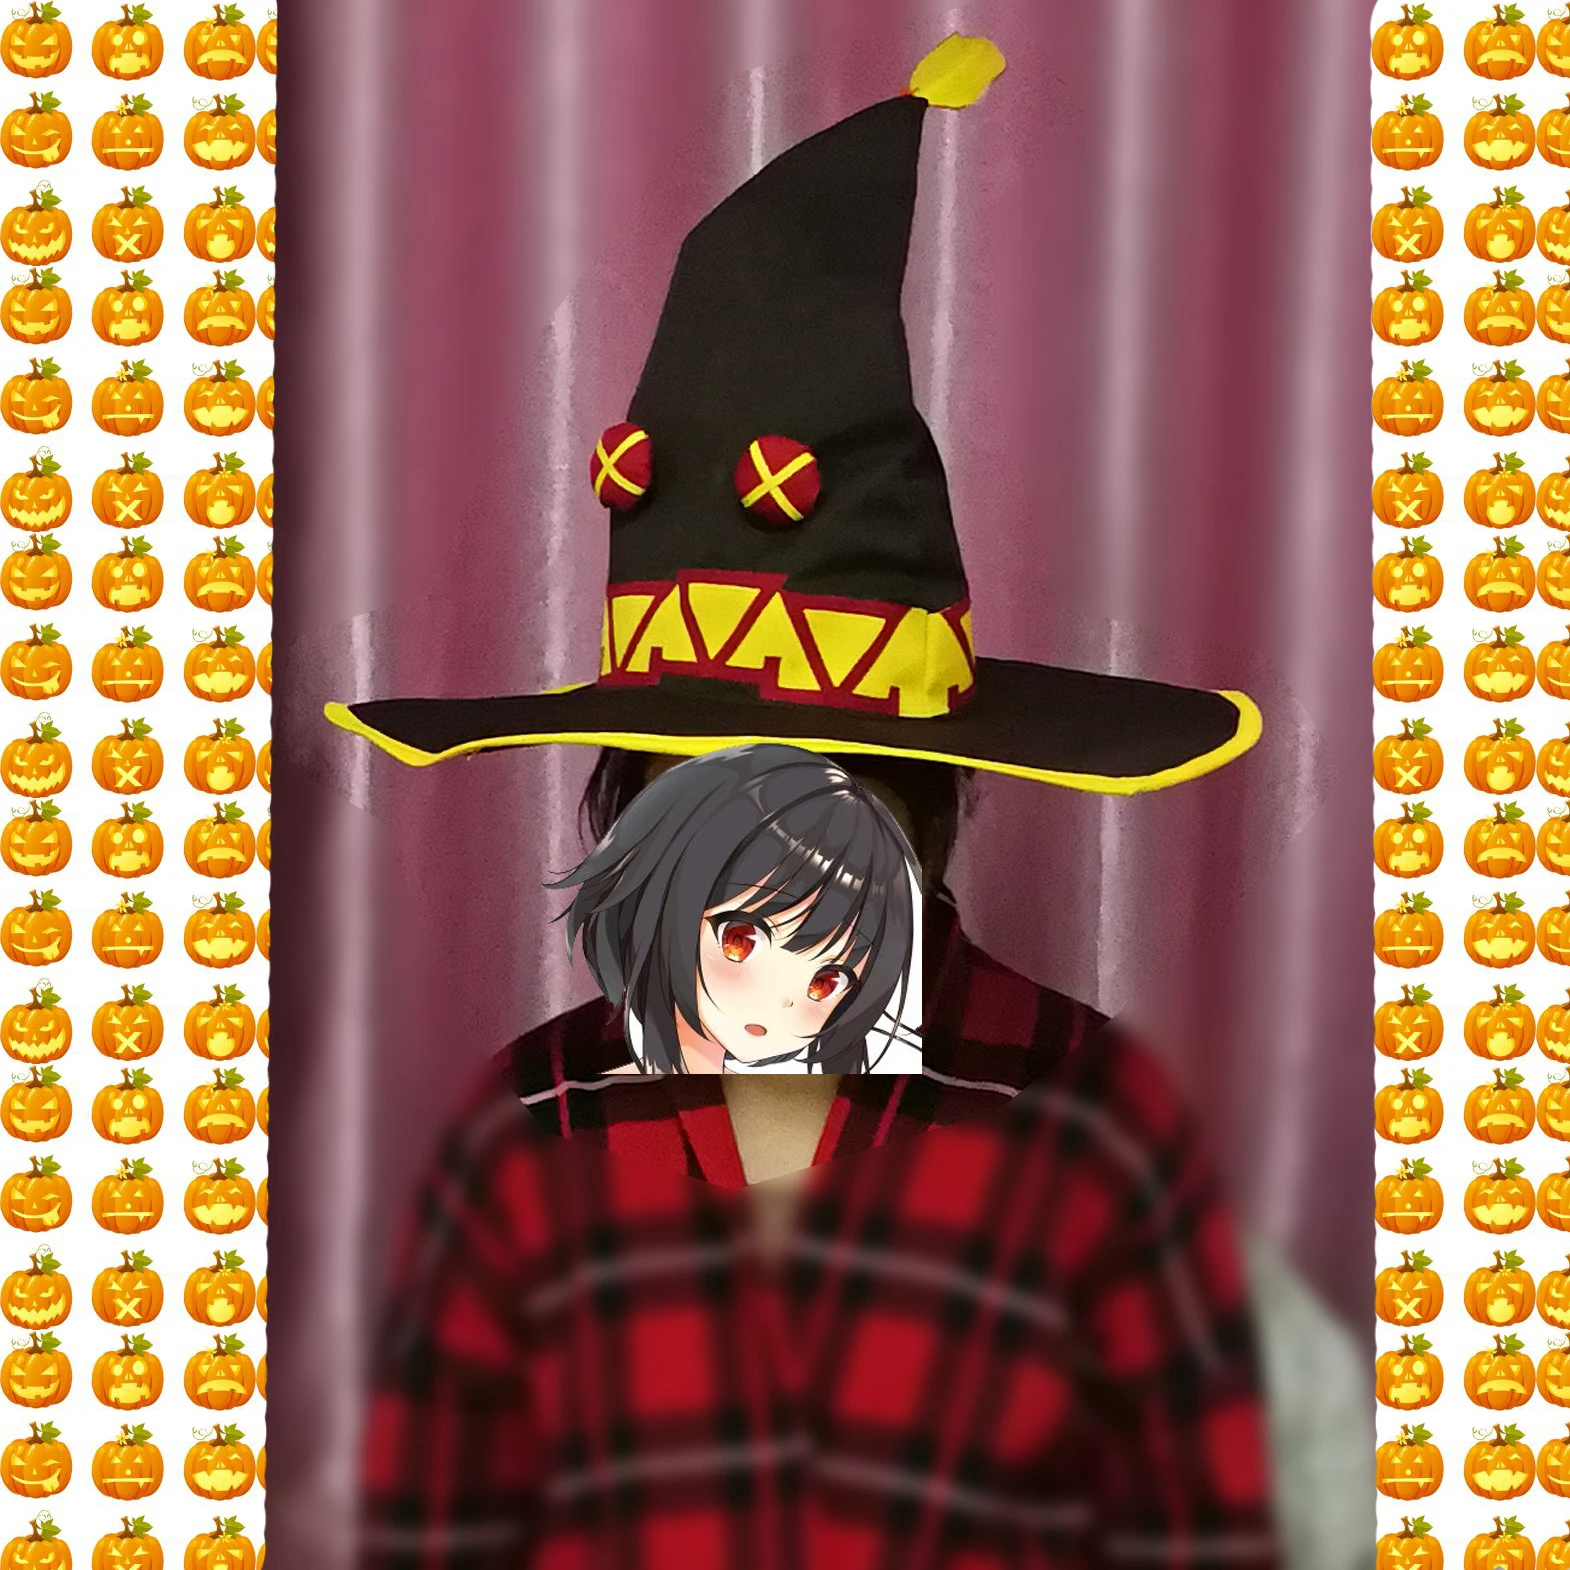 Wizard Witch Megumin Hat Cosplay Halloween Costume Accessories